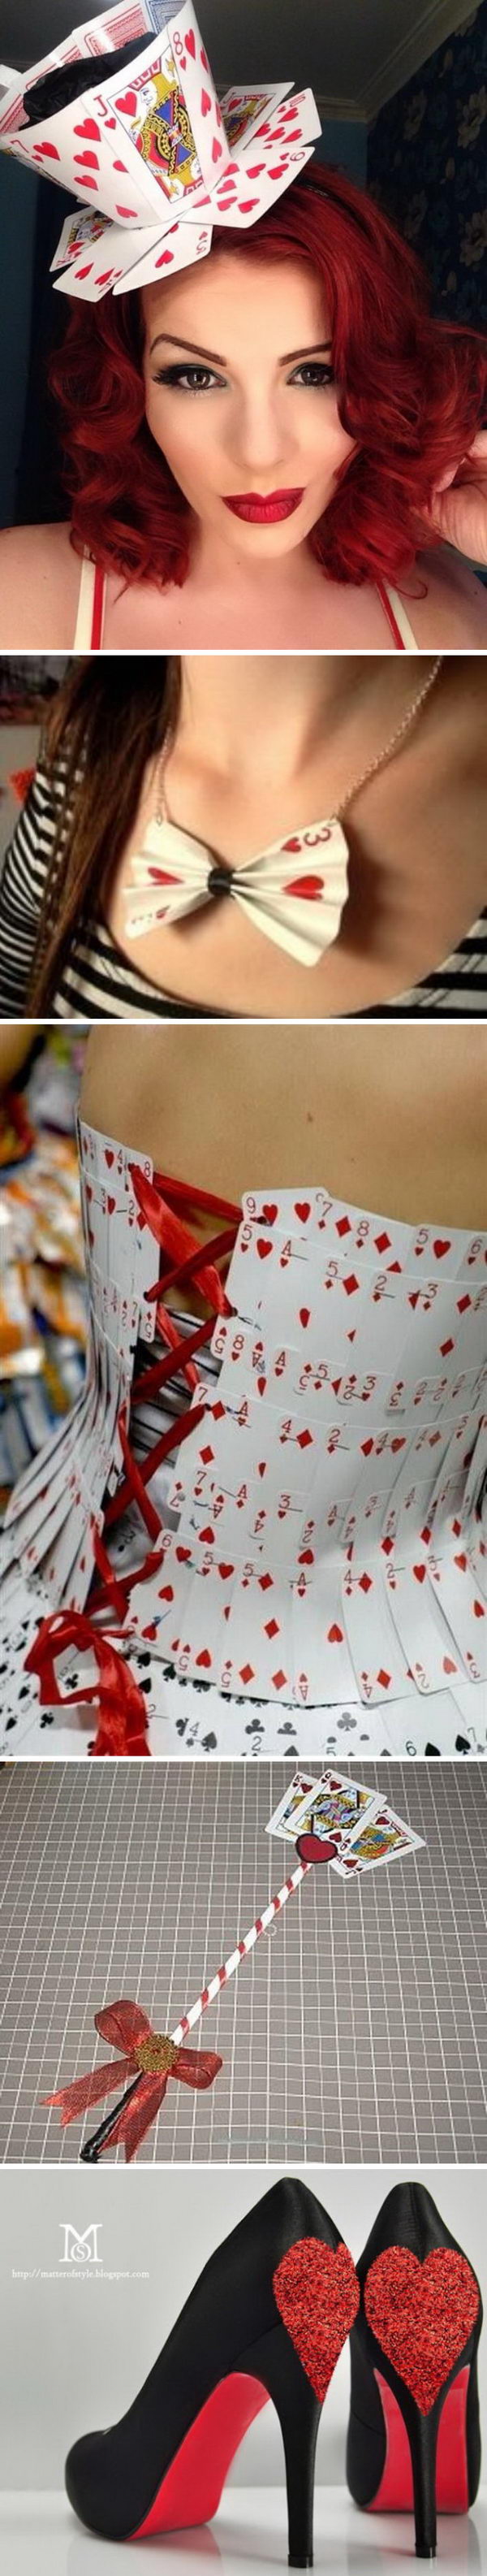 25 Queen Of Hearts Costume Ideas And Diy Tutorials Hative